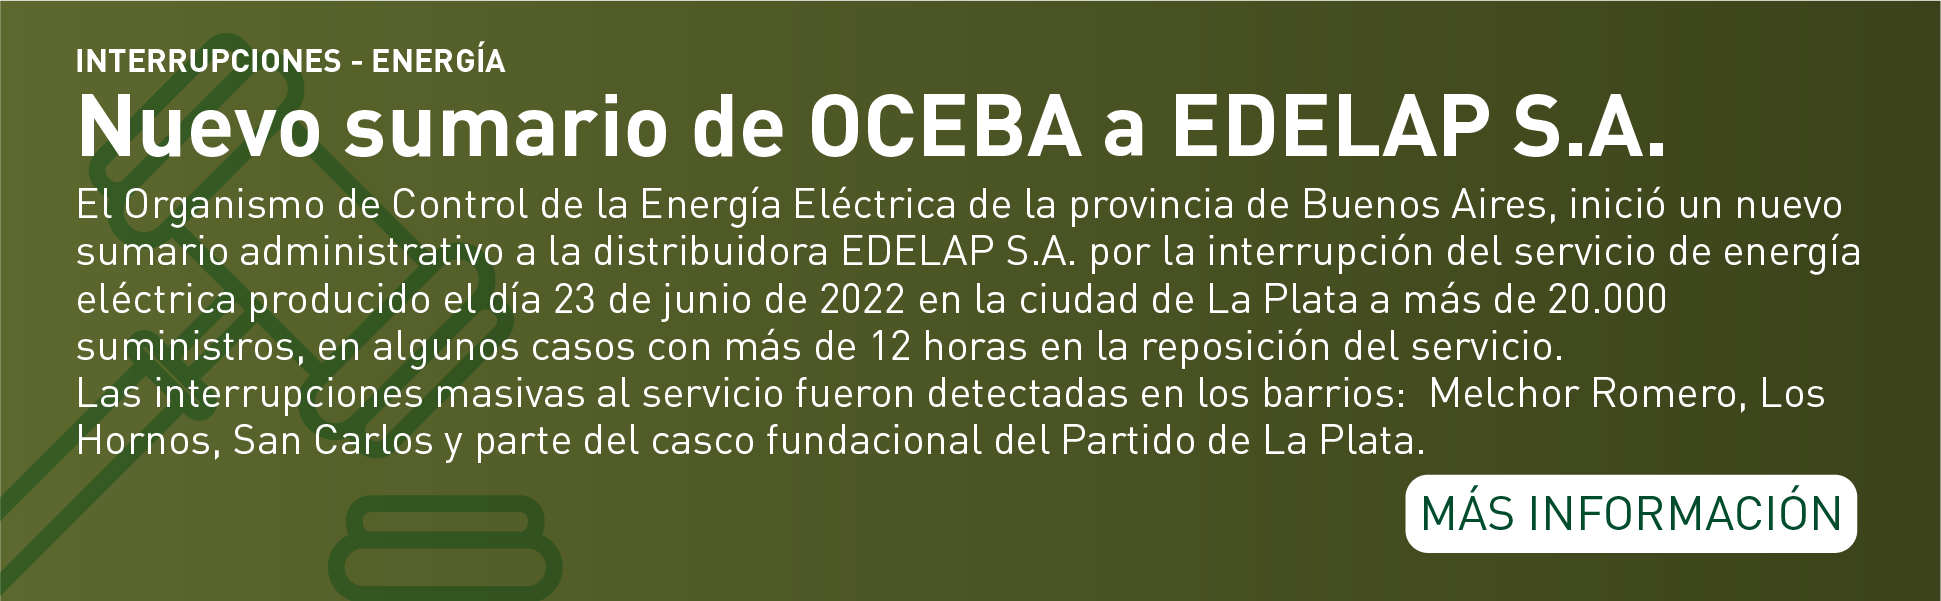 Nuevo sumario de OCEBA a EDELAP S.A.